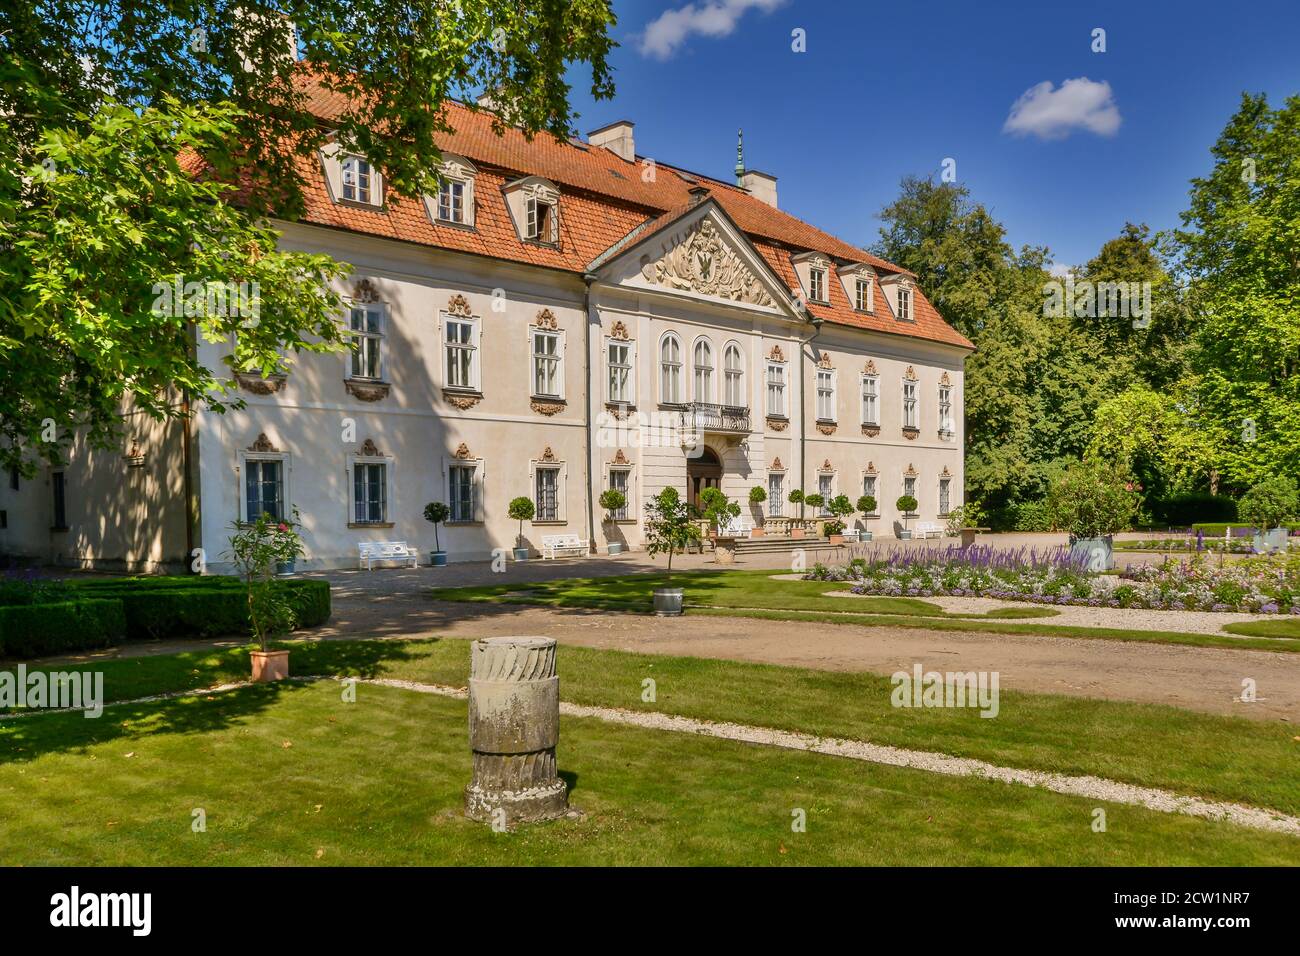 Baroque palace in Nieborów, Poland Stock Photo